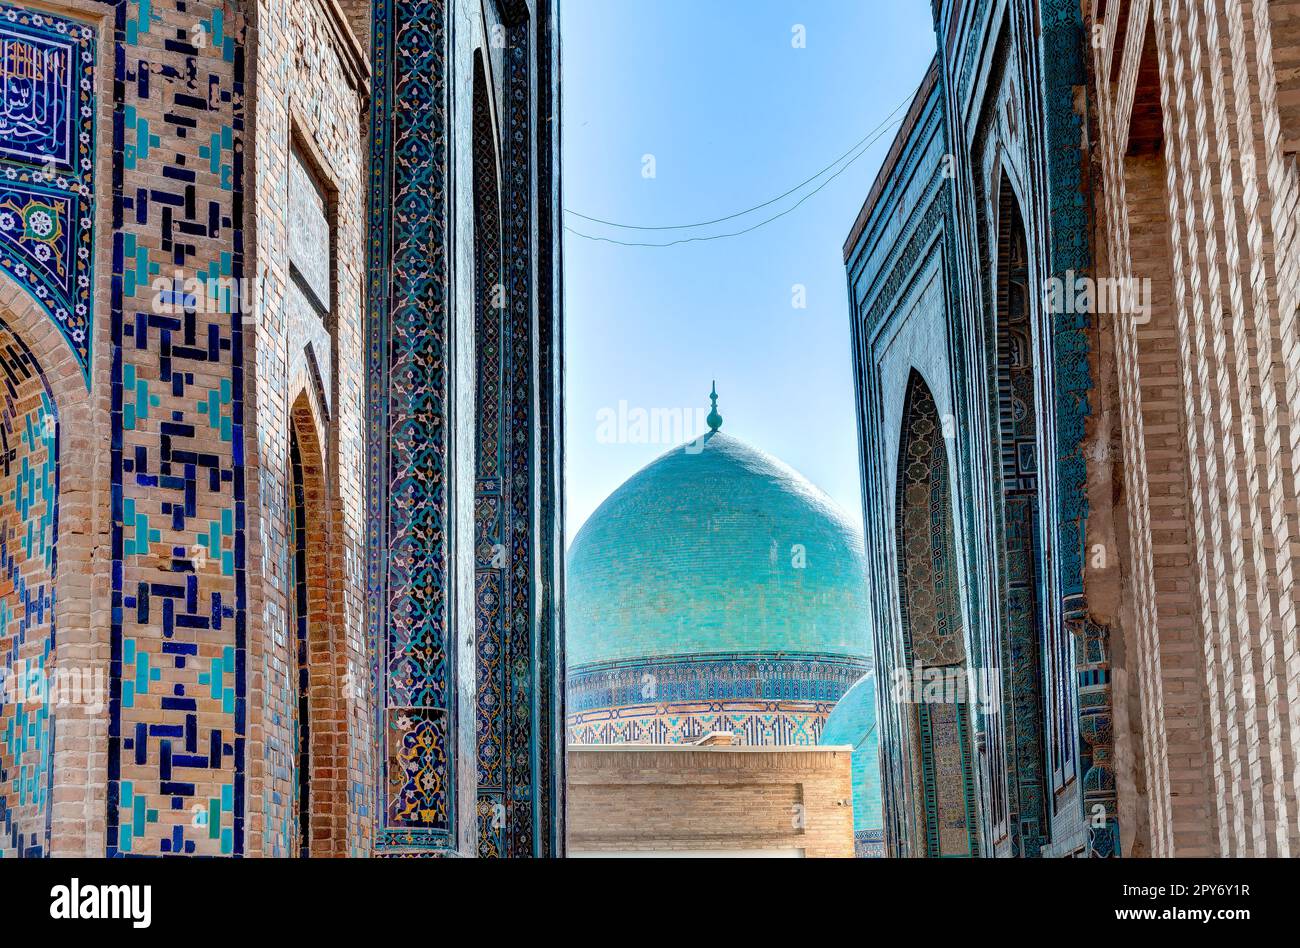 Shah I Zinda, Samarkand Stock Photo